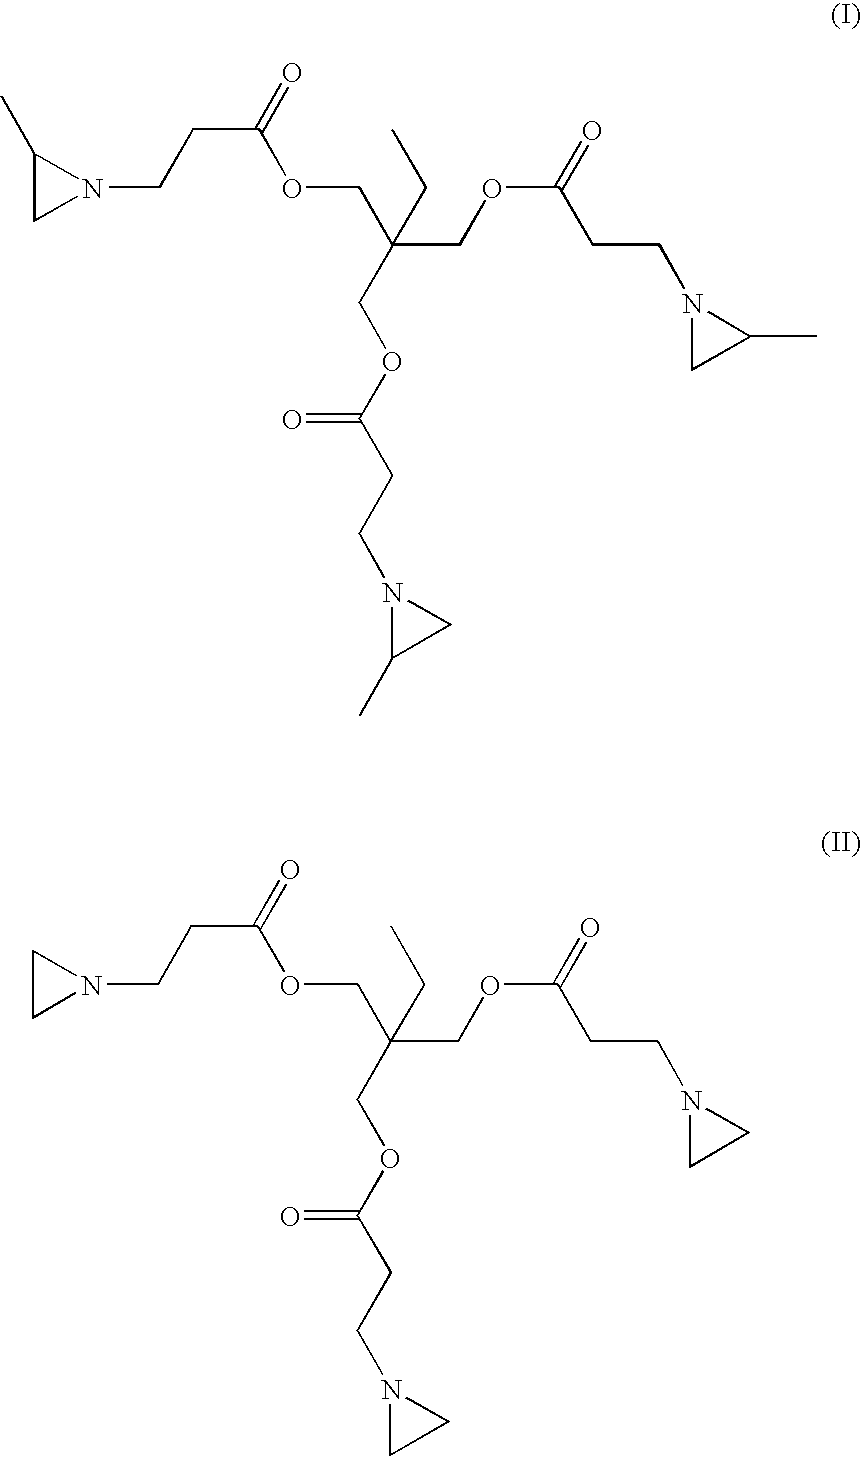 Emulsion polymer binder with aziridine crosslinking agent for mineral fiber webs